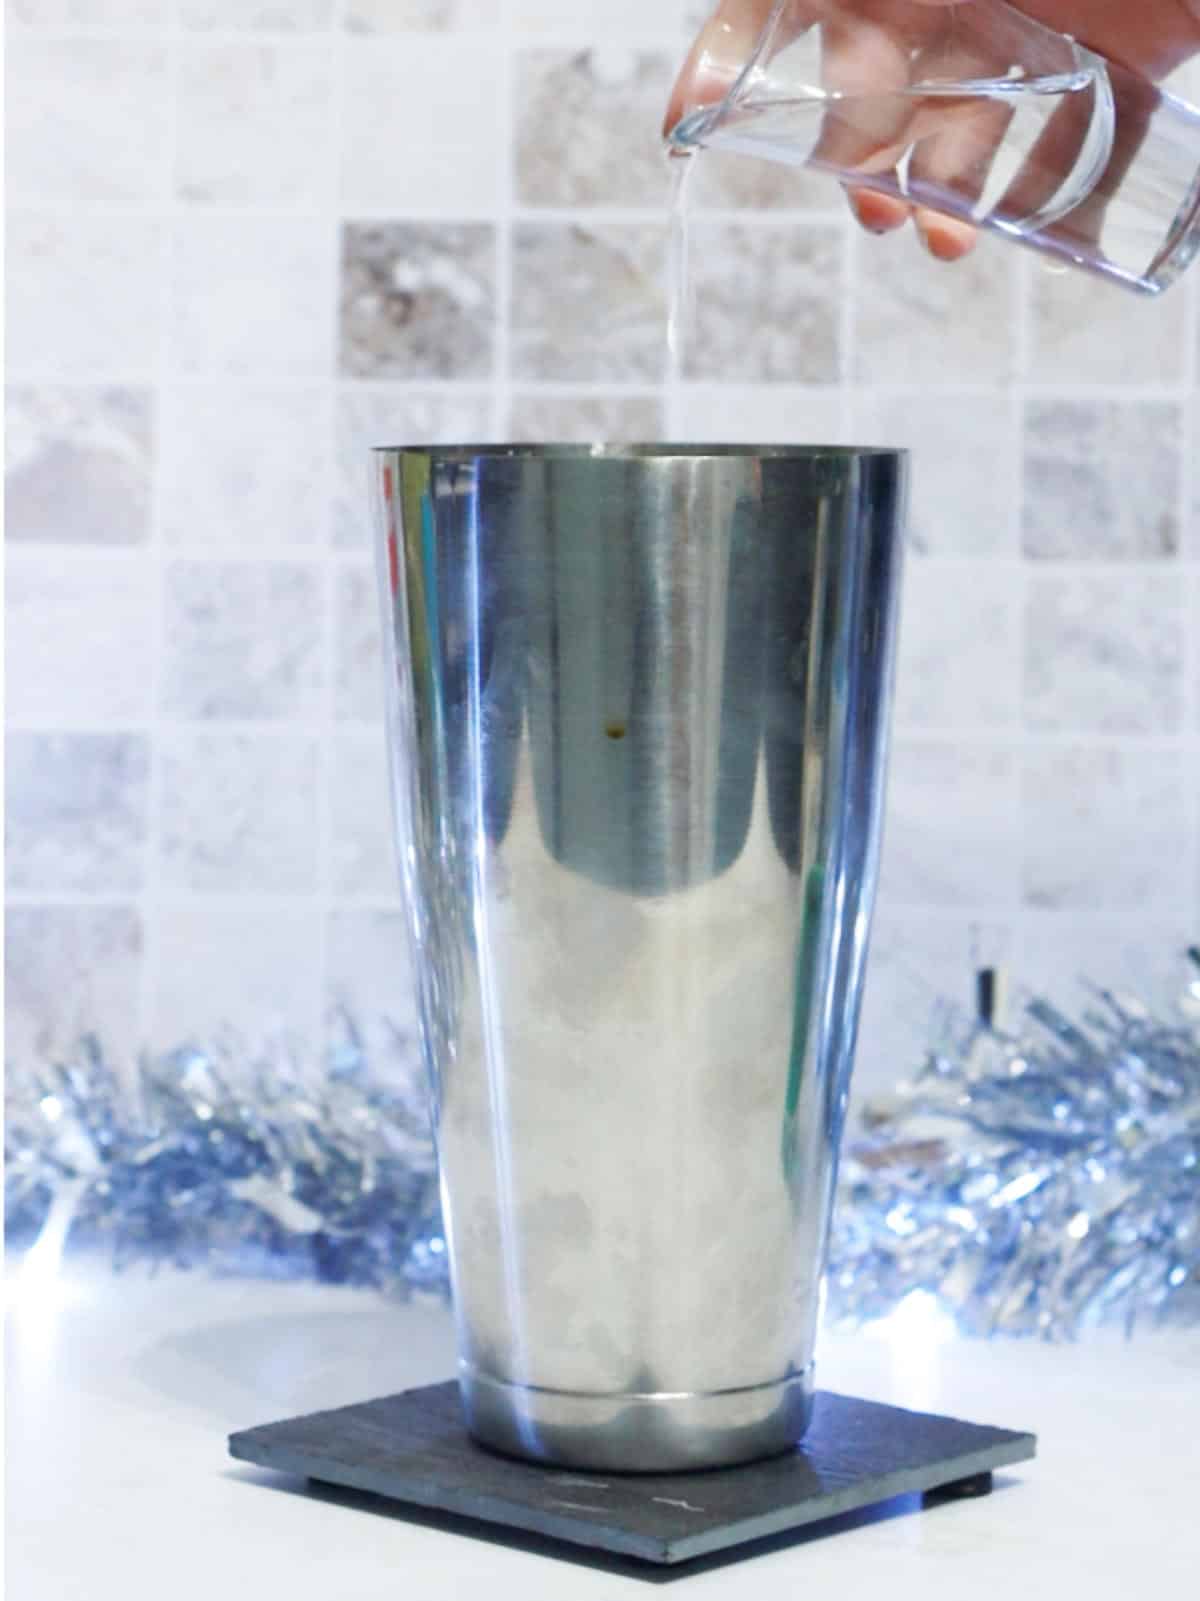 adding creme de cocoa to a cocktail shaker.